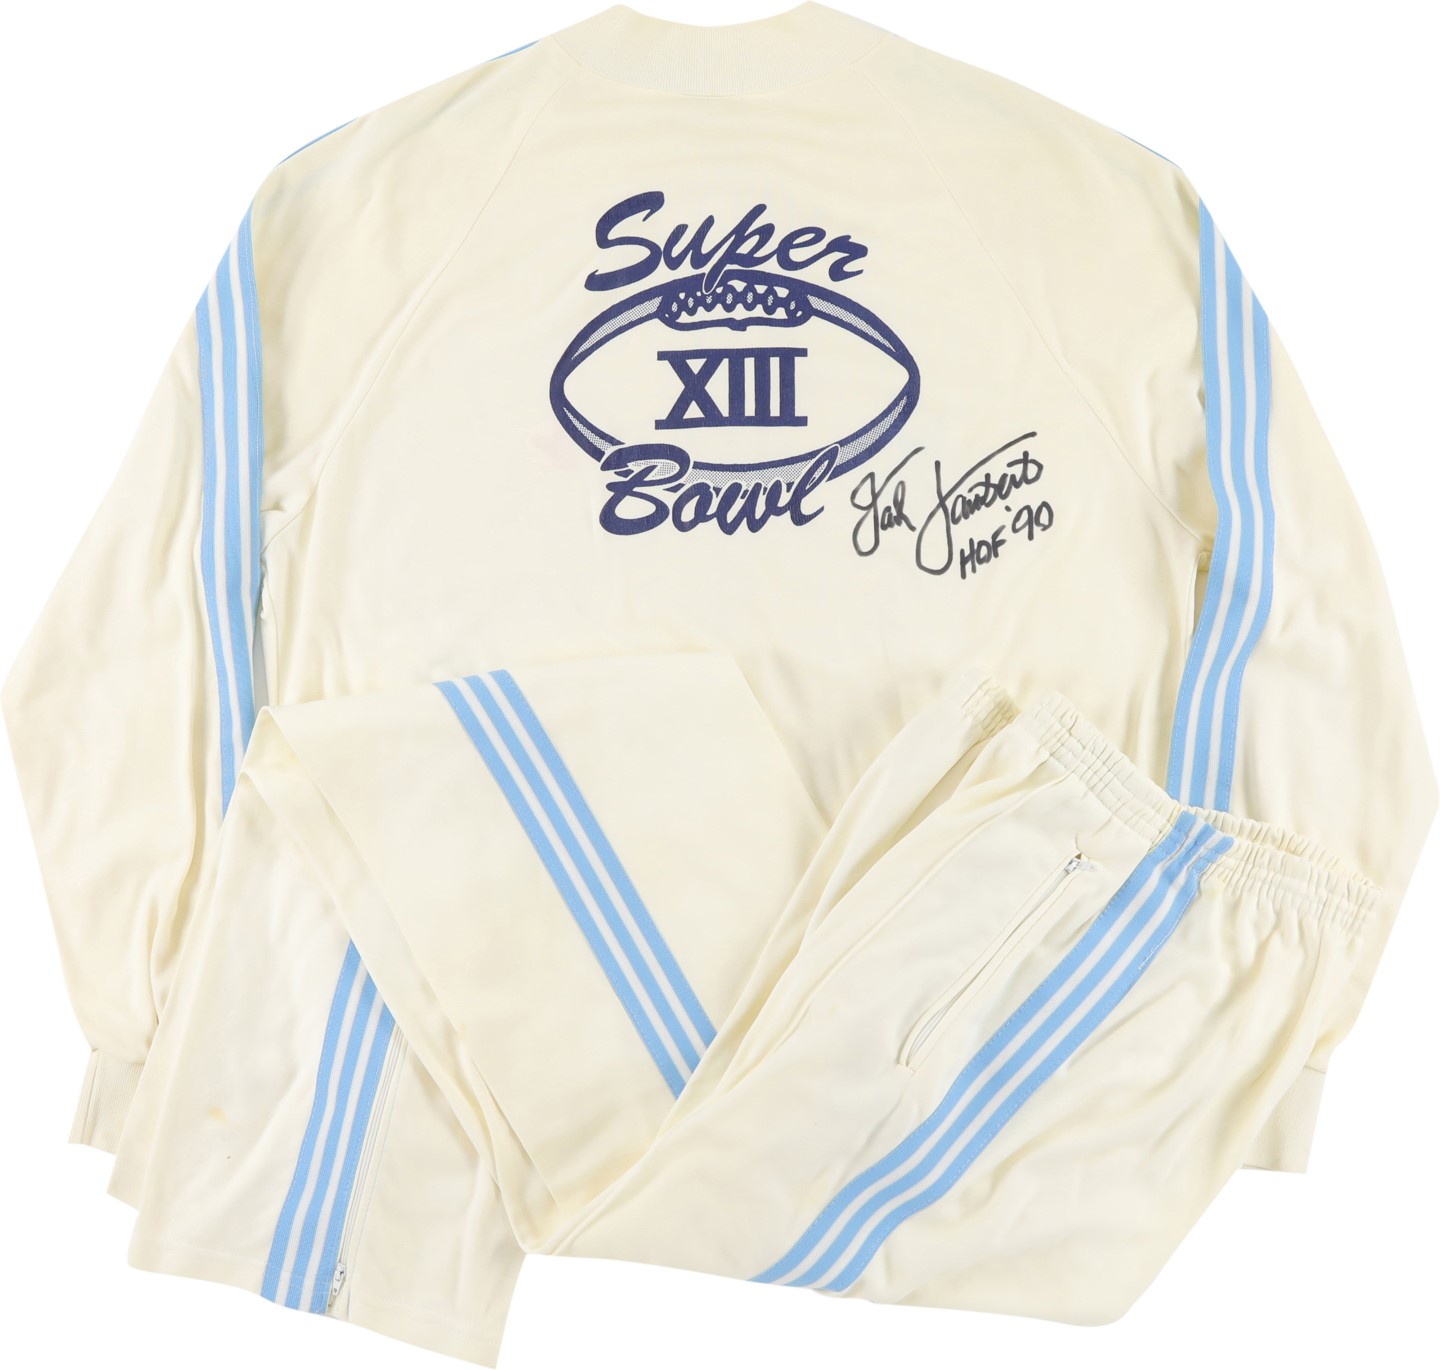 The Jack Lambert Collection - Jack Lambert Super Bowl XIII Adidas Warm-Up Suit